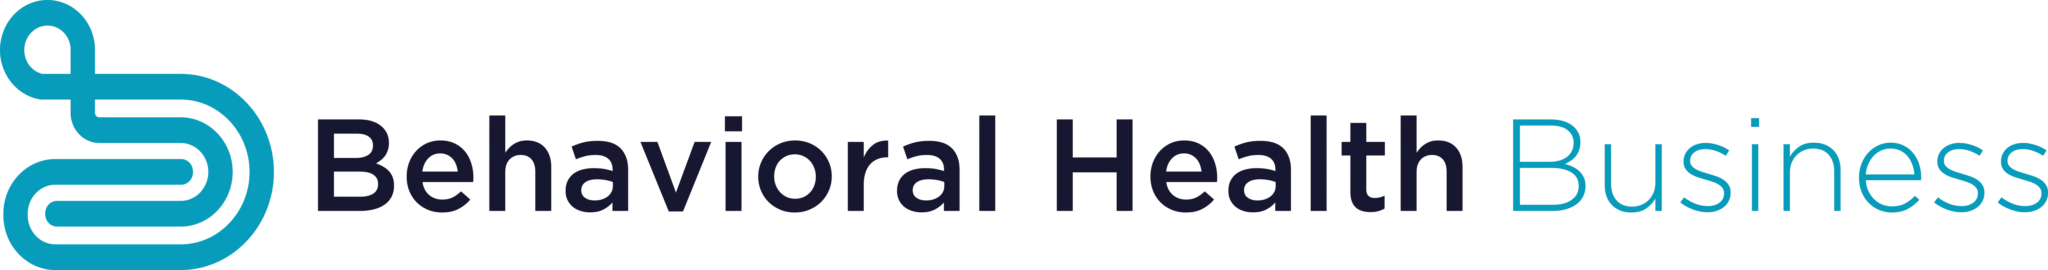 behavioral health business bhb logo